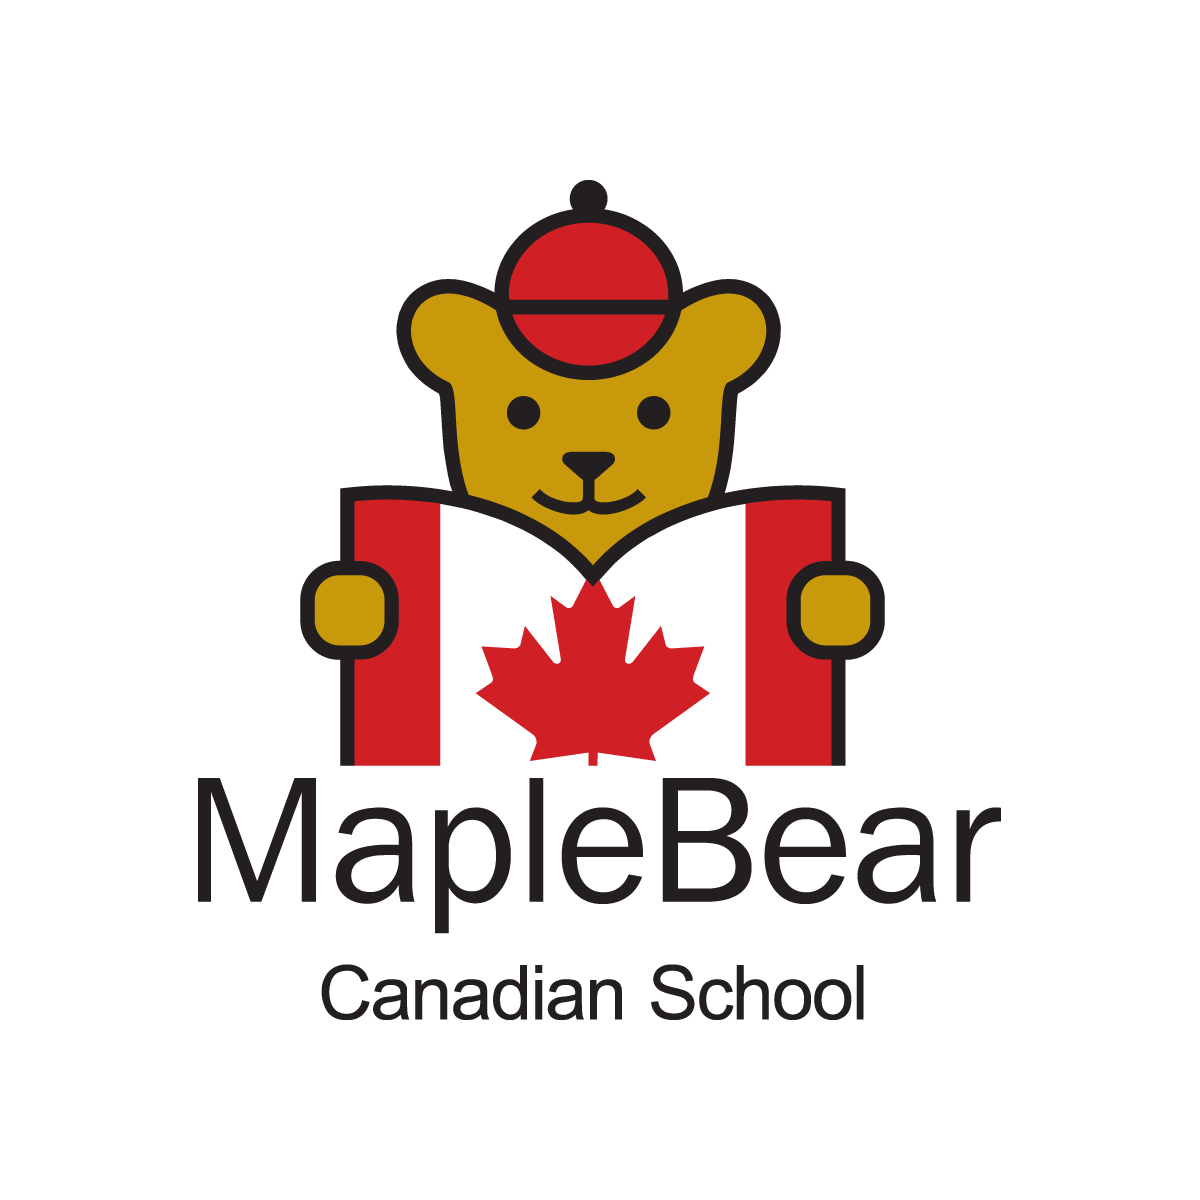 (c) Maplebear.ca